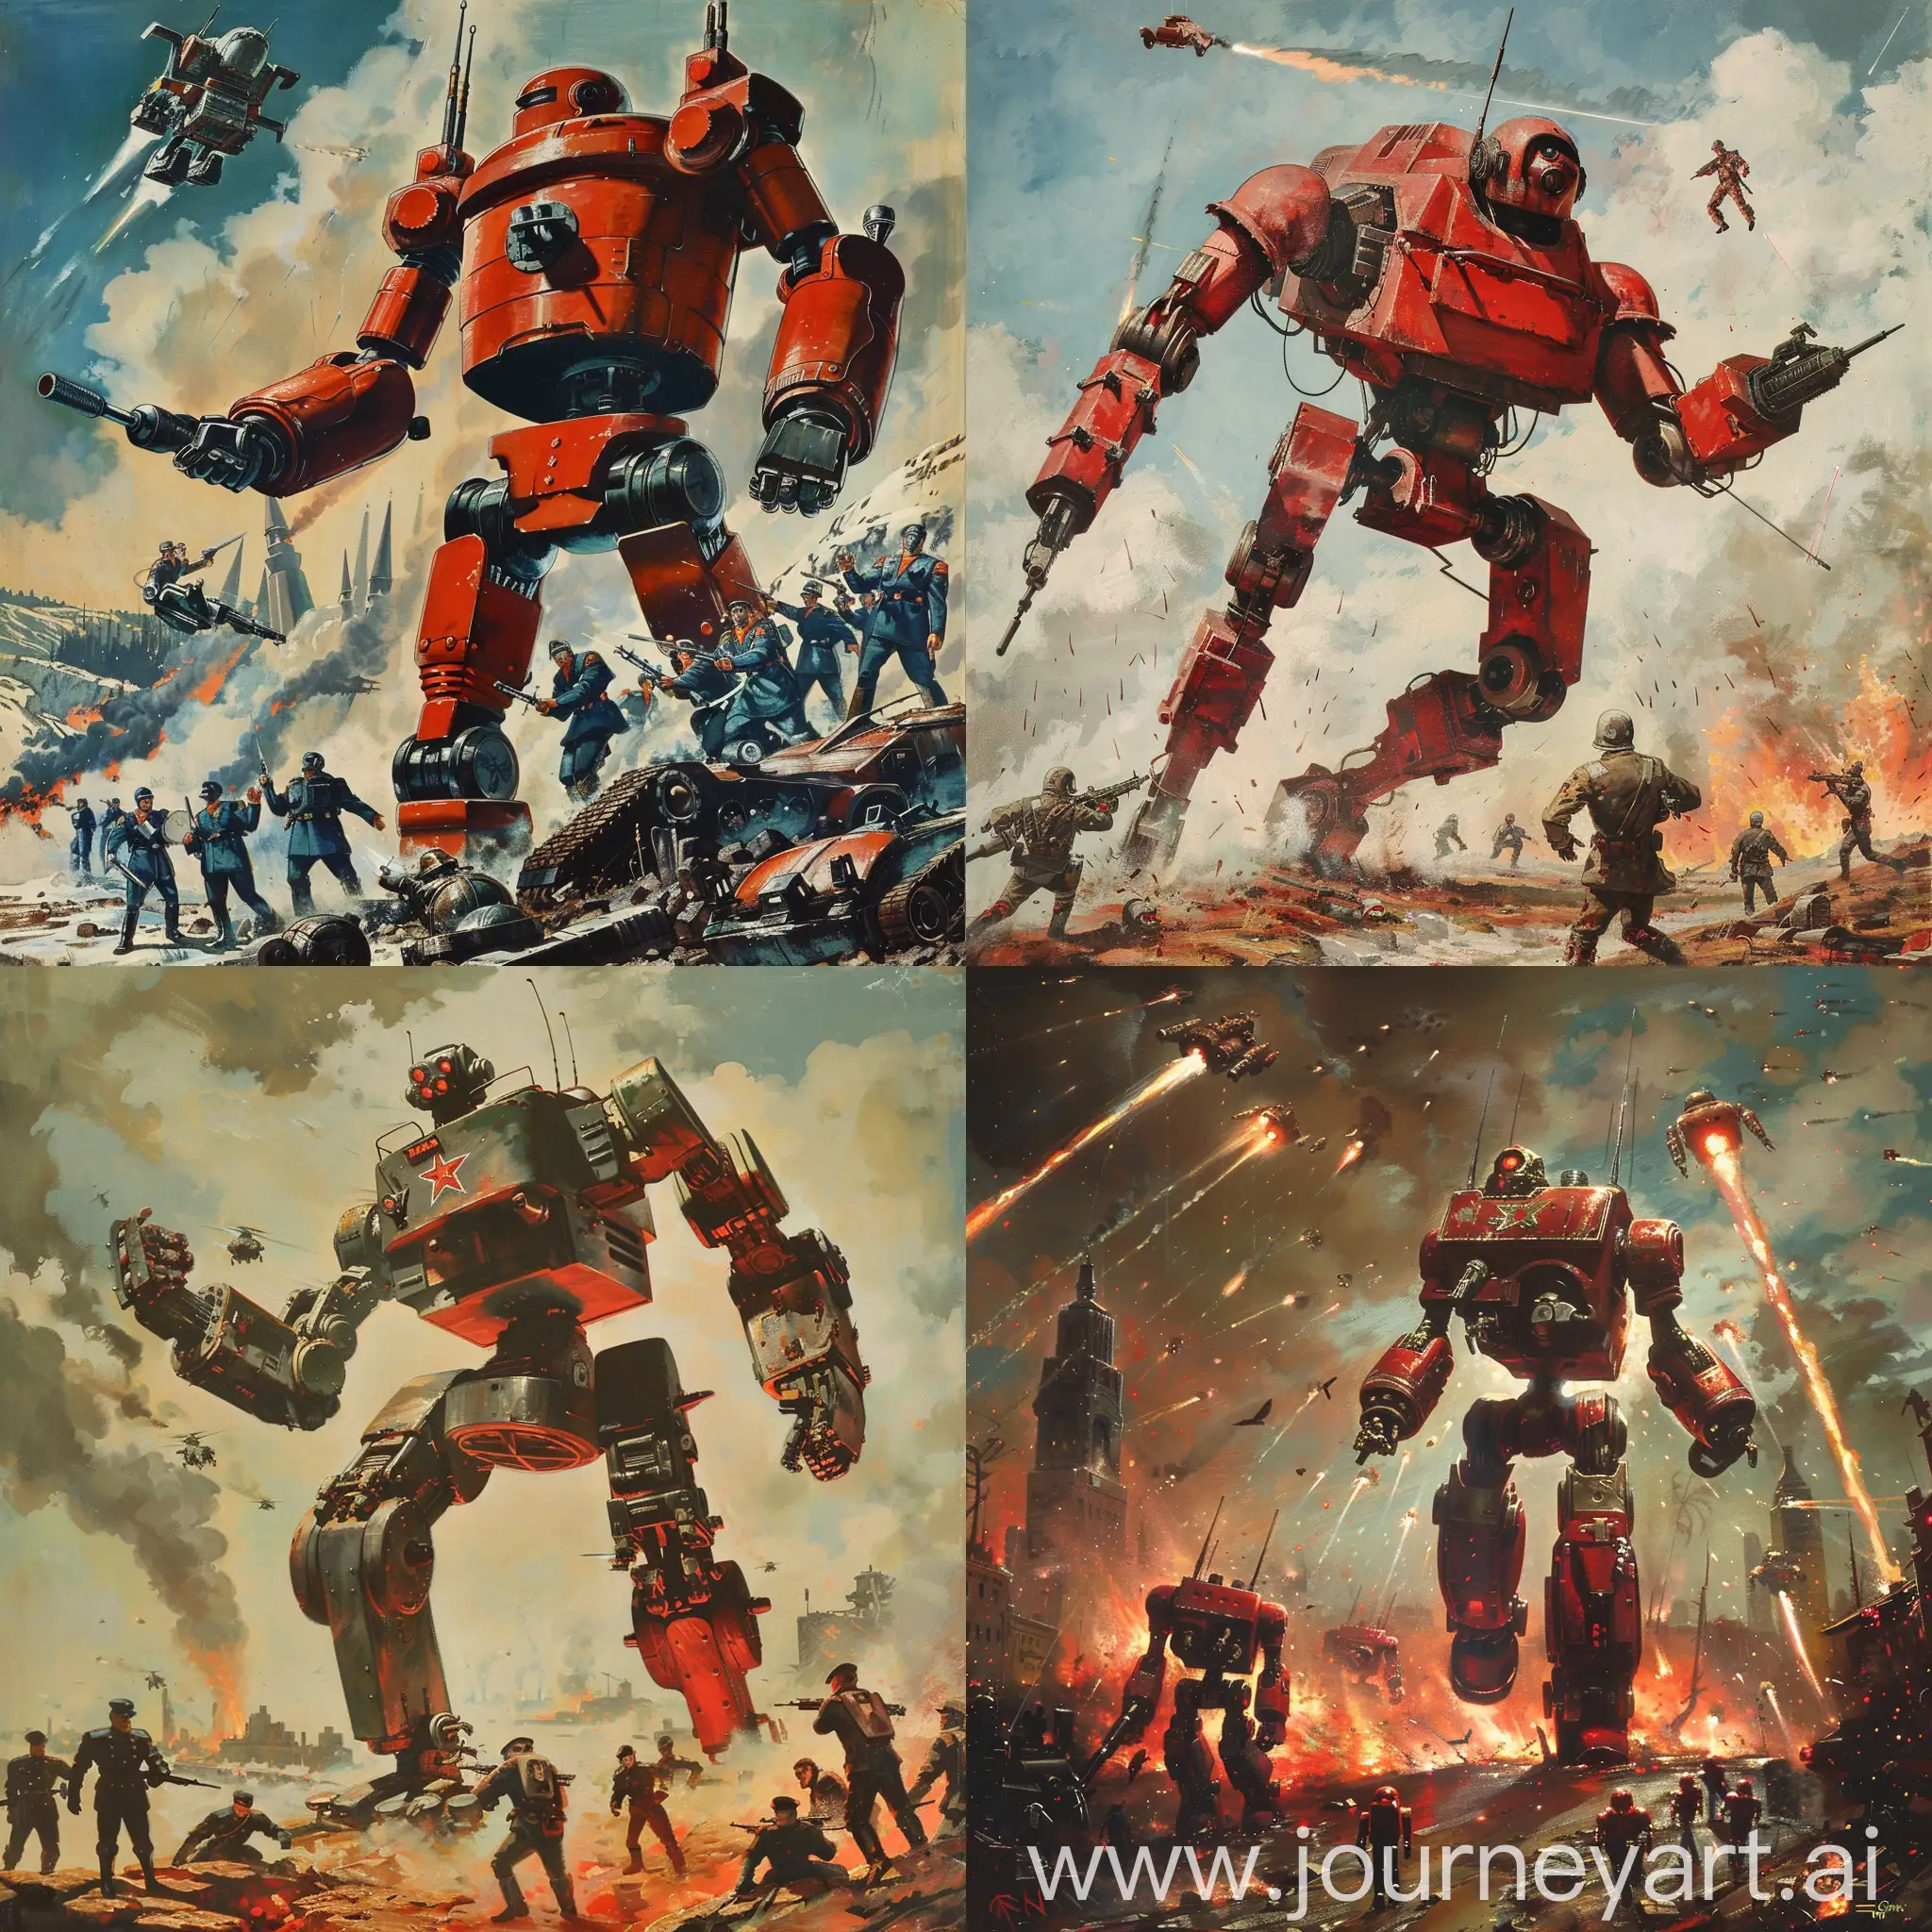 Epic-Battle-Soviet-Robots-Engage-in-War-Against-Humans